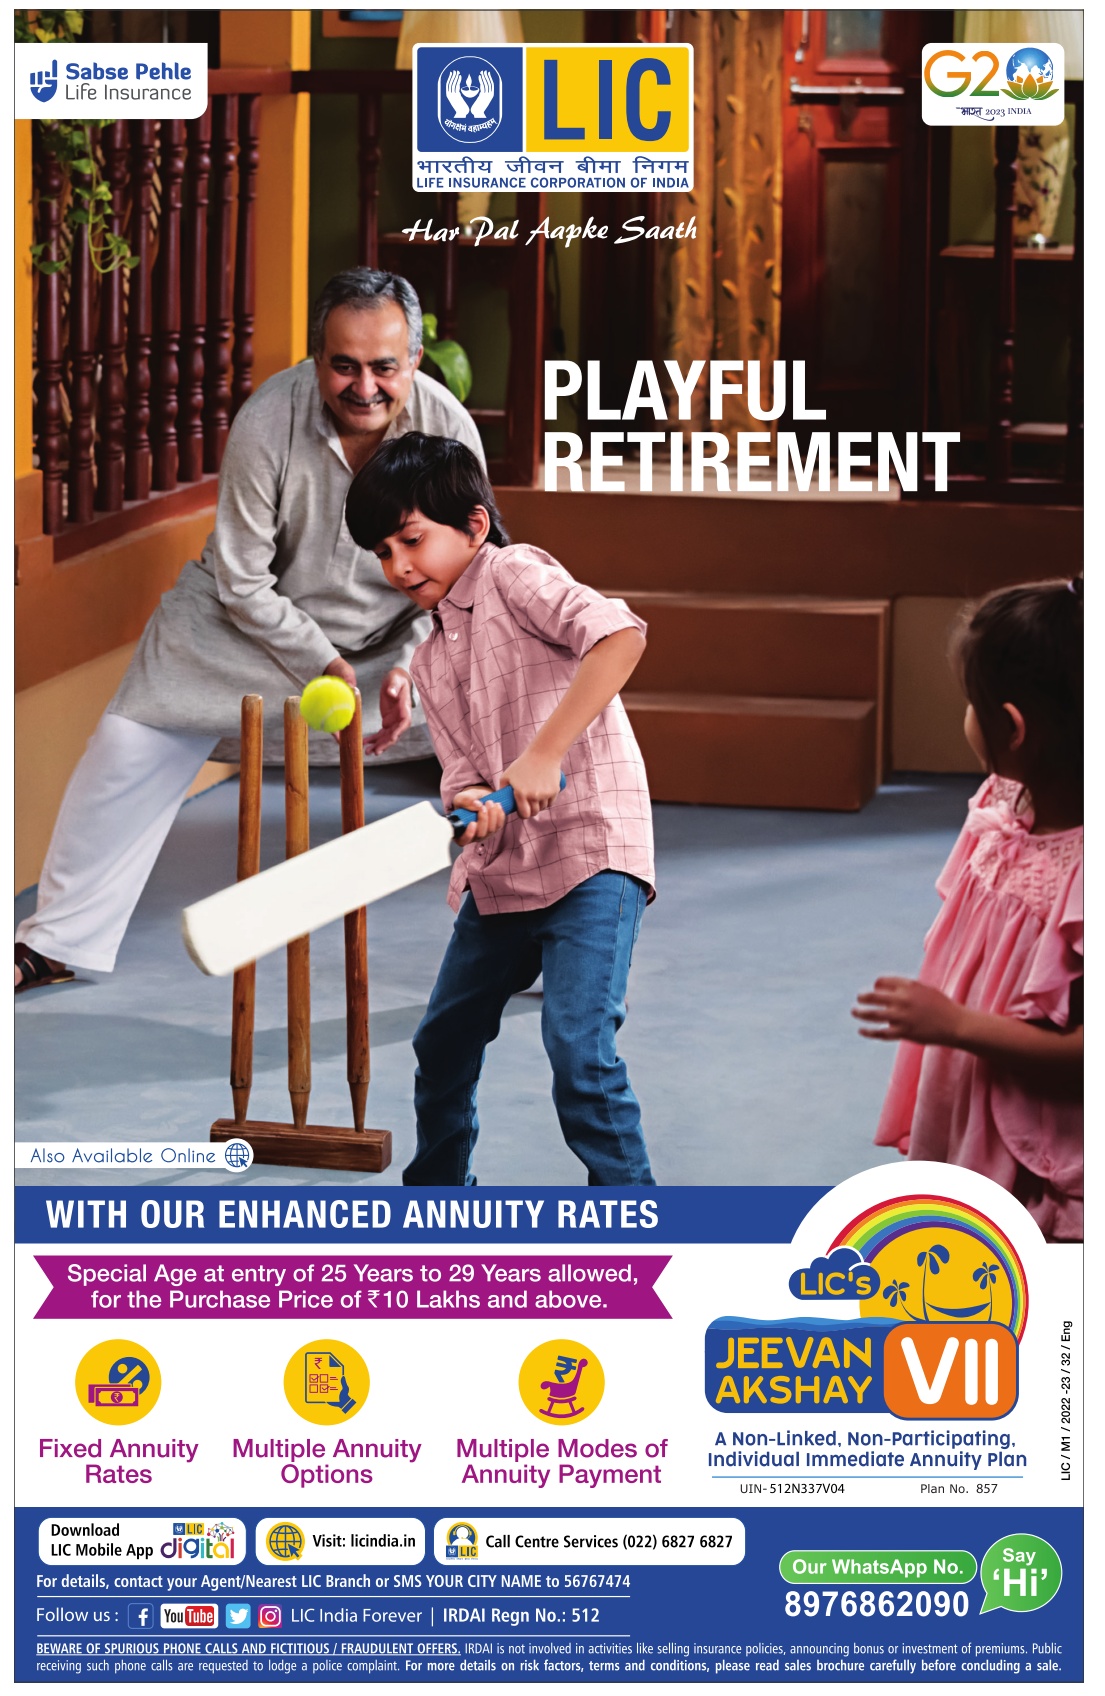 Lic-har-pal-aapke-saath-Jeevan-Akshay-VII-playful-retirement-with-our-enhanced-annuity-plan-ad-times-of-India-delhi-09-05-2023.jpg